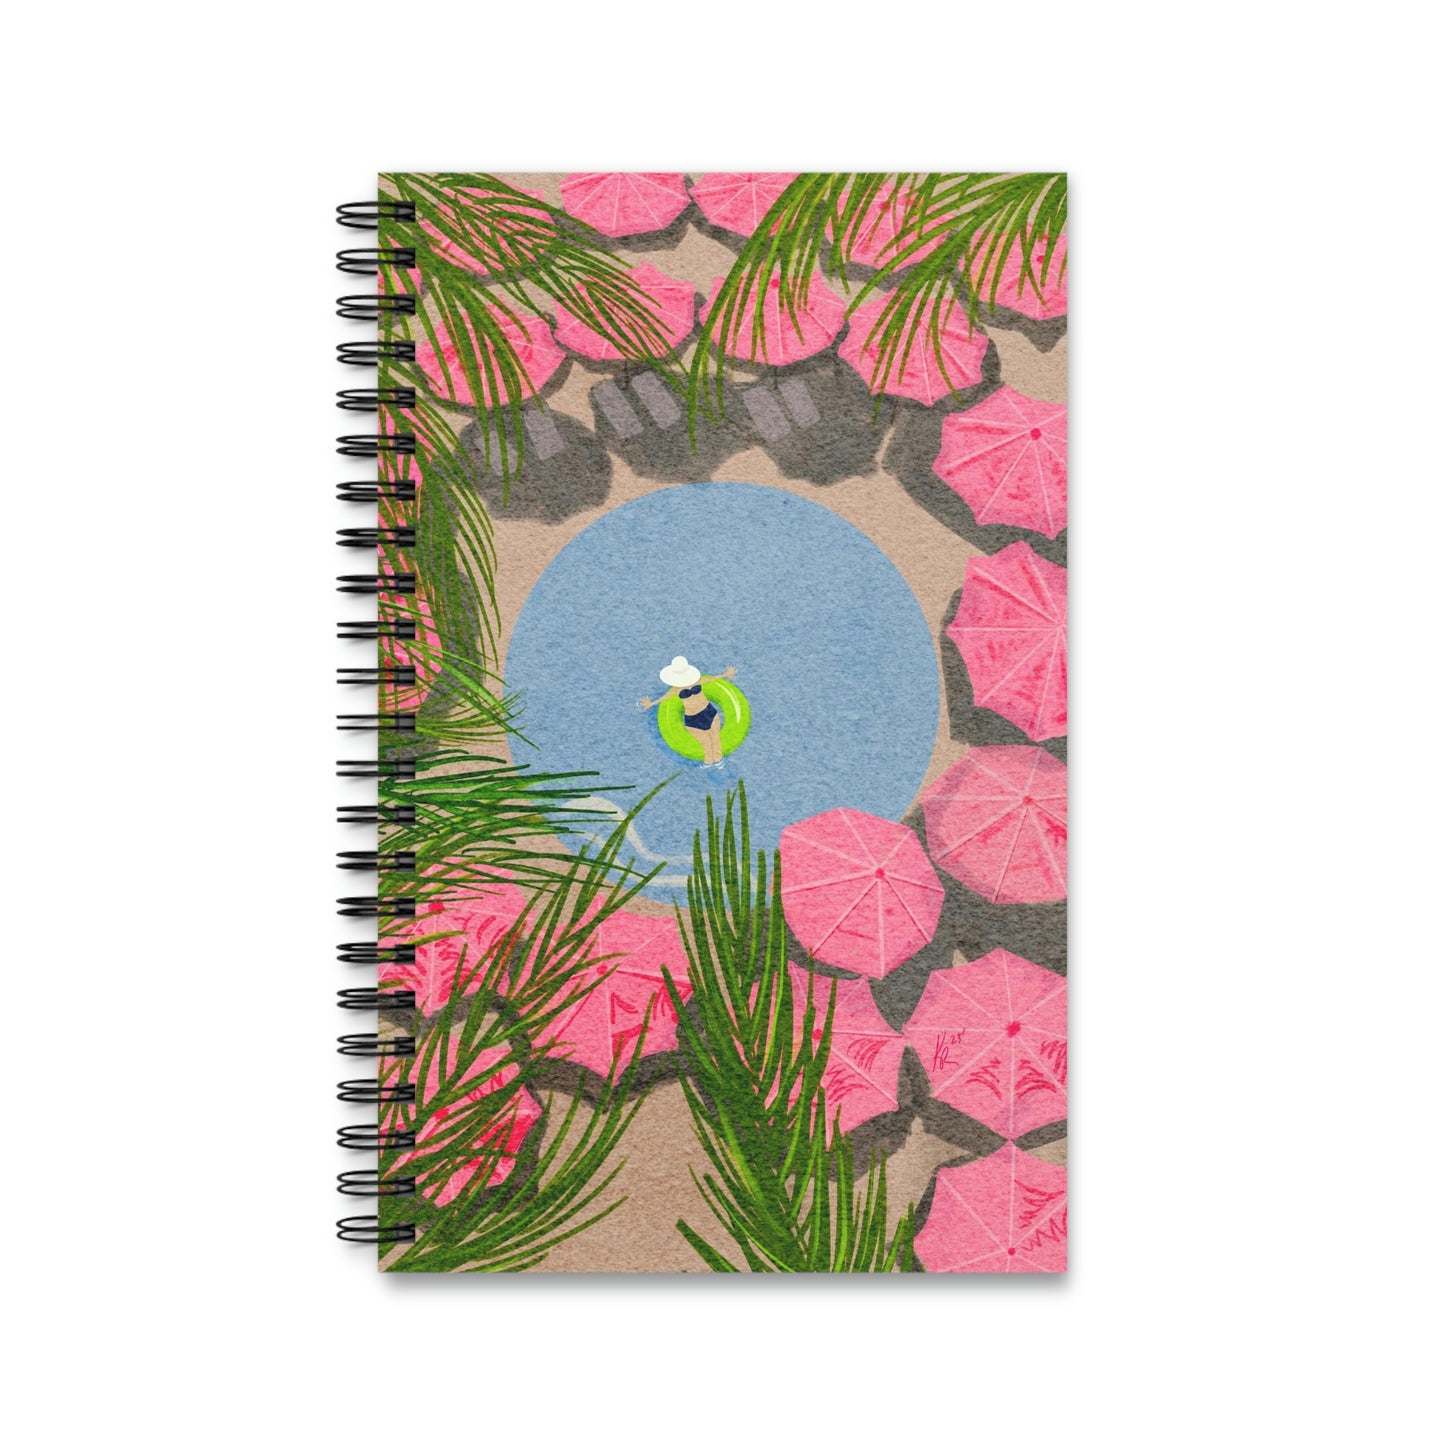 Chill'n Spiral Notebook/Journal